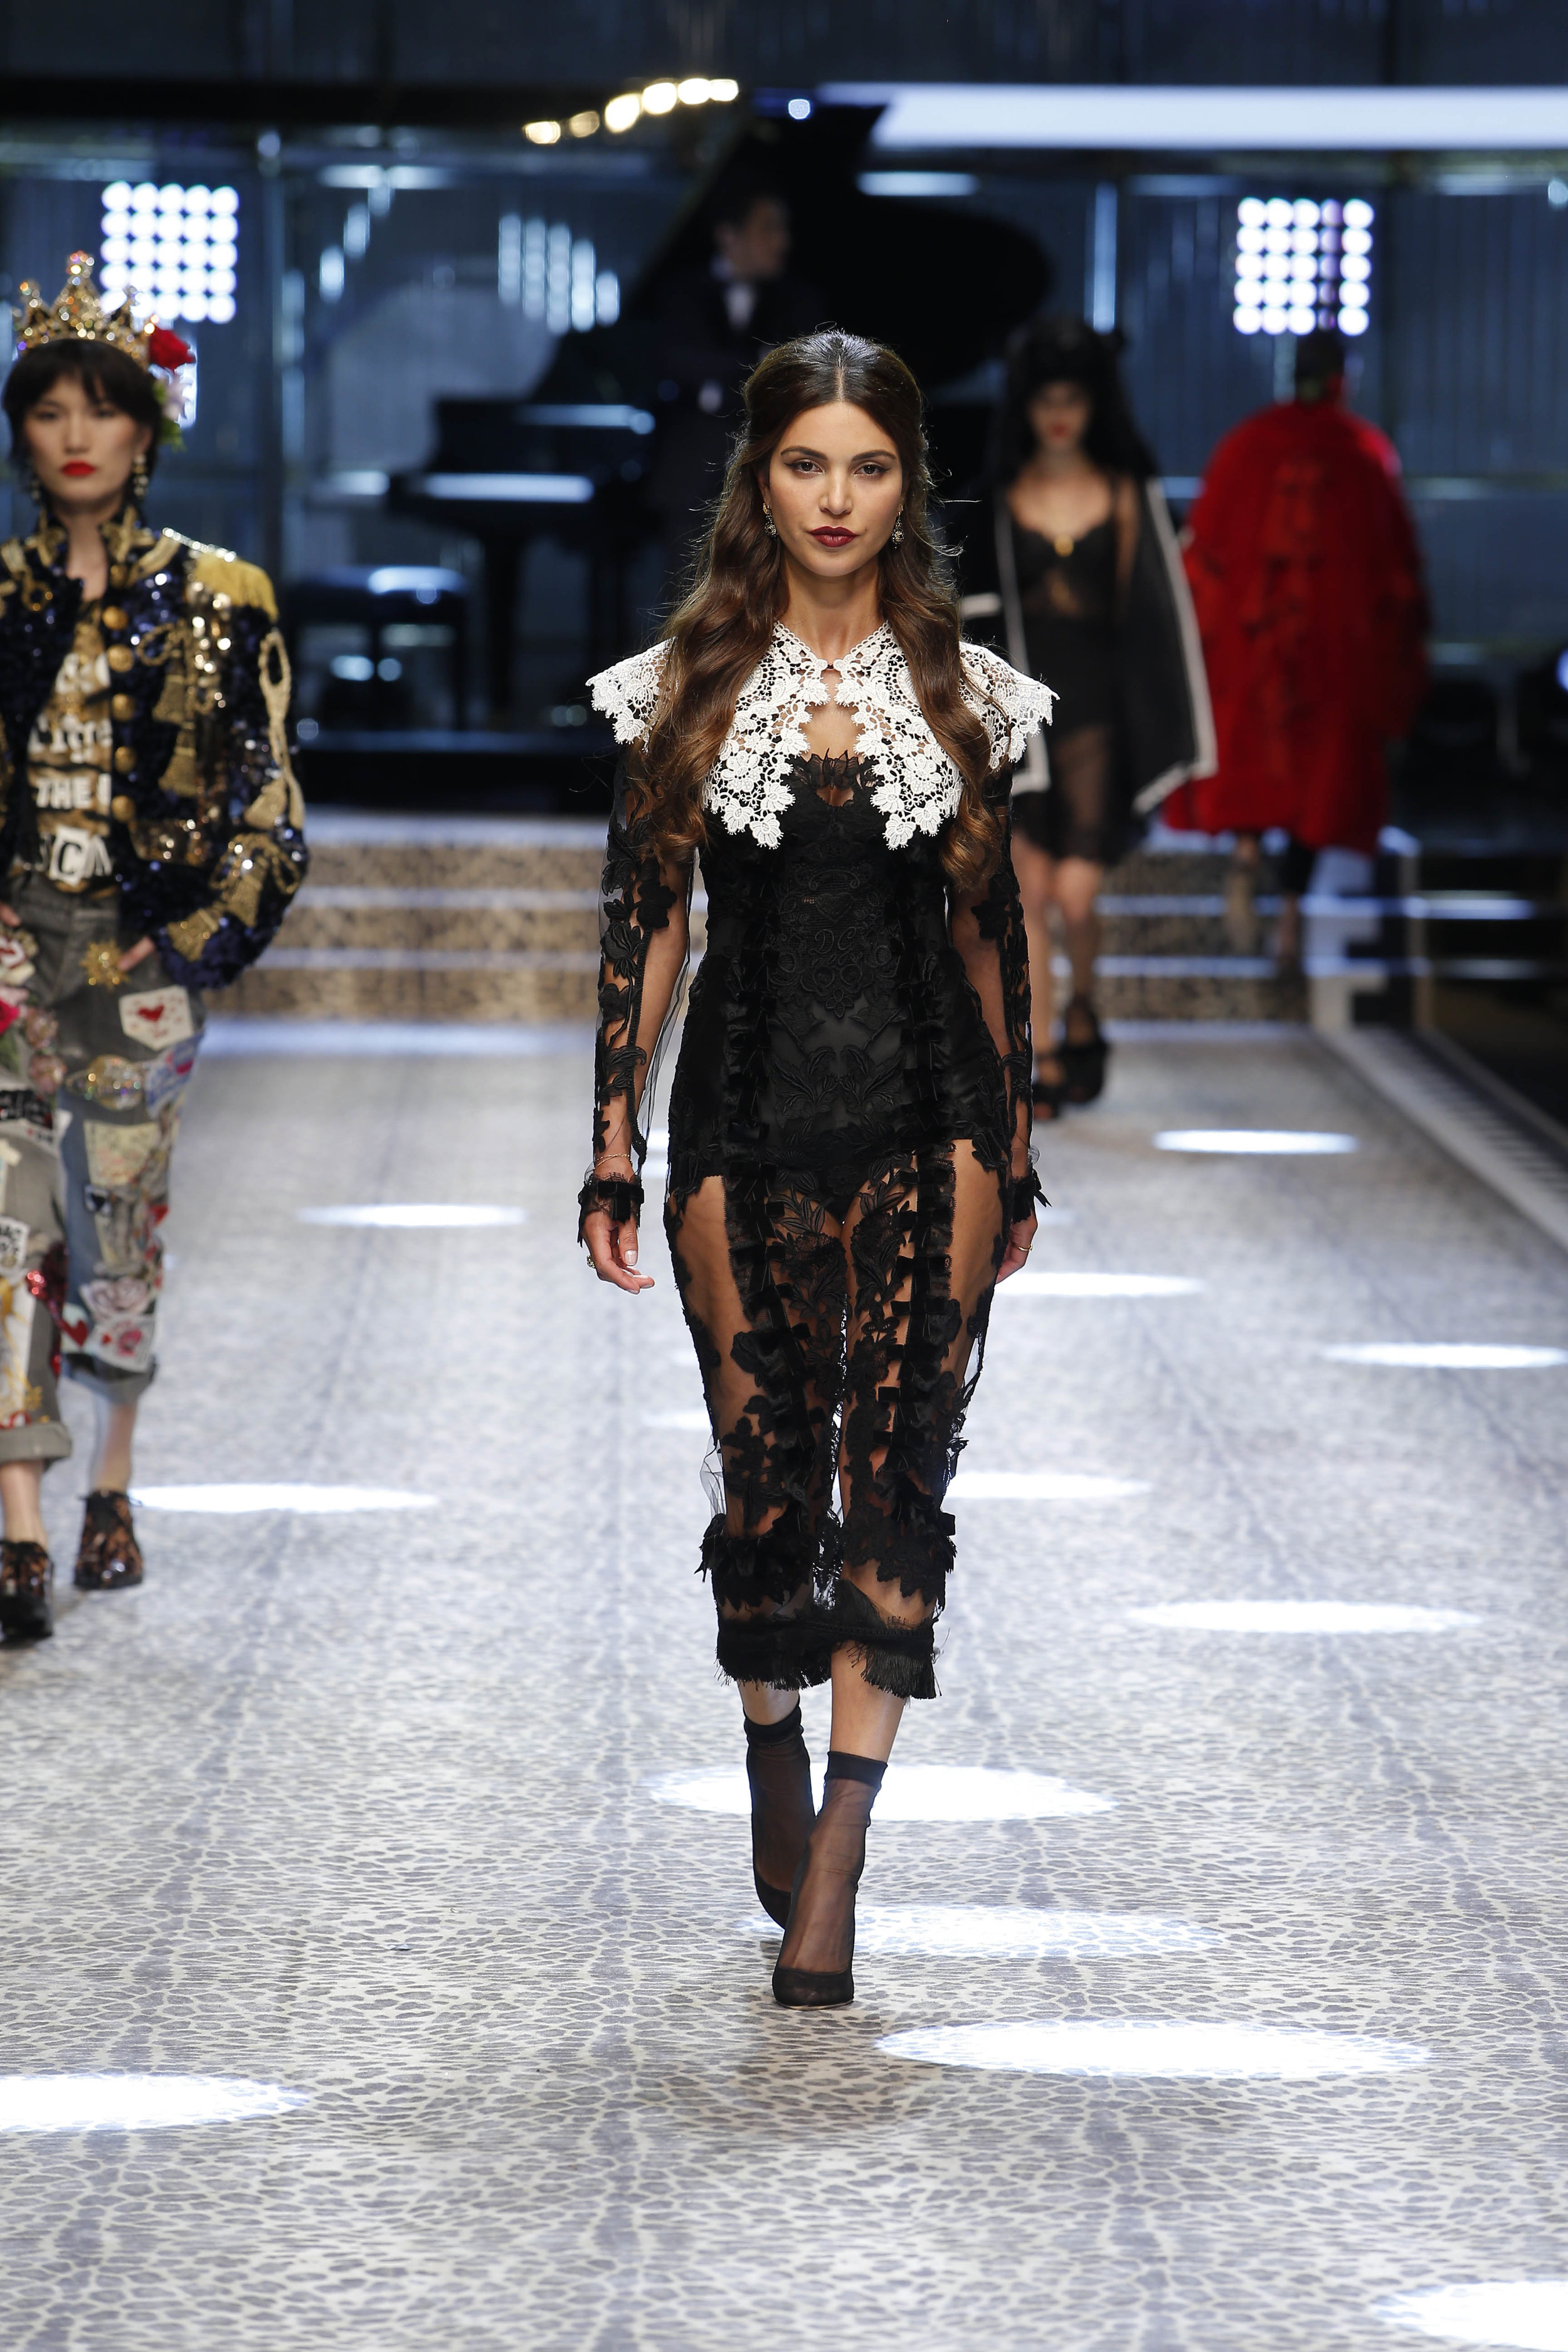 Dolce&Gabbana_women's fashion show fw17-18_Runway_images (6).jpg